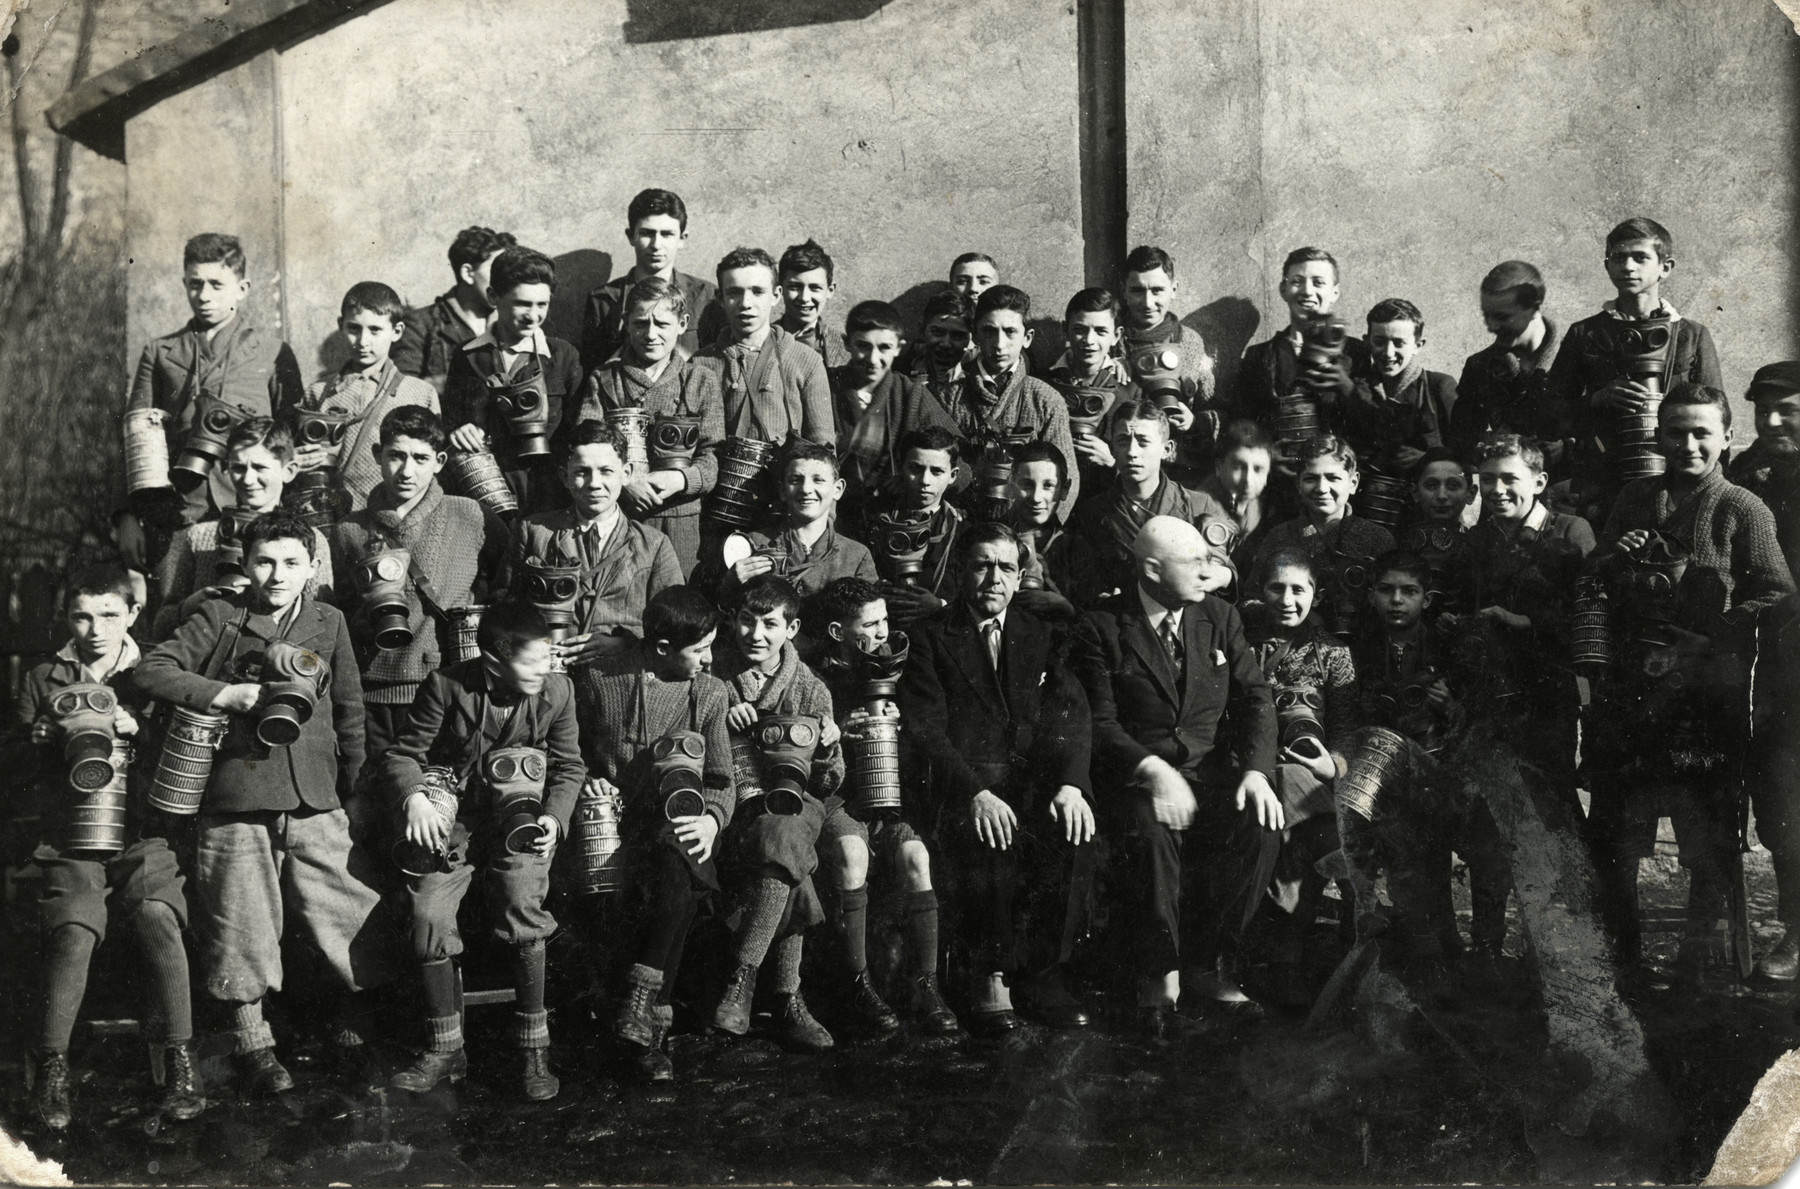 Group portrait of children from the Korczak orphanage.